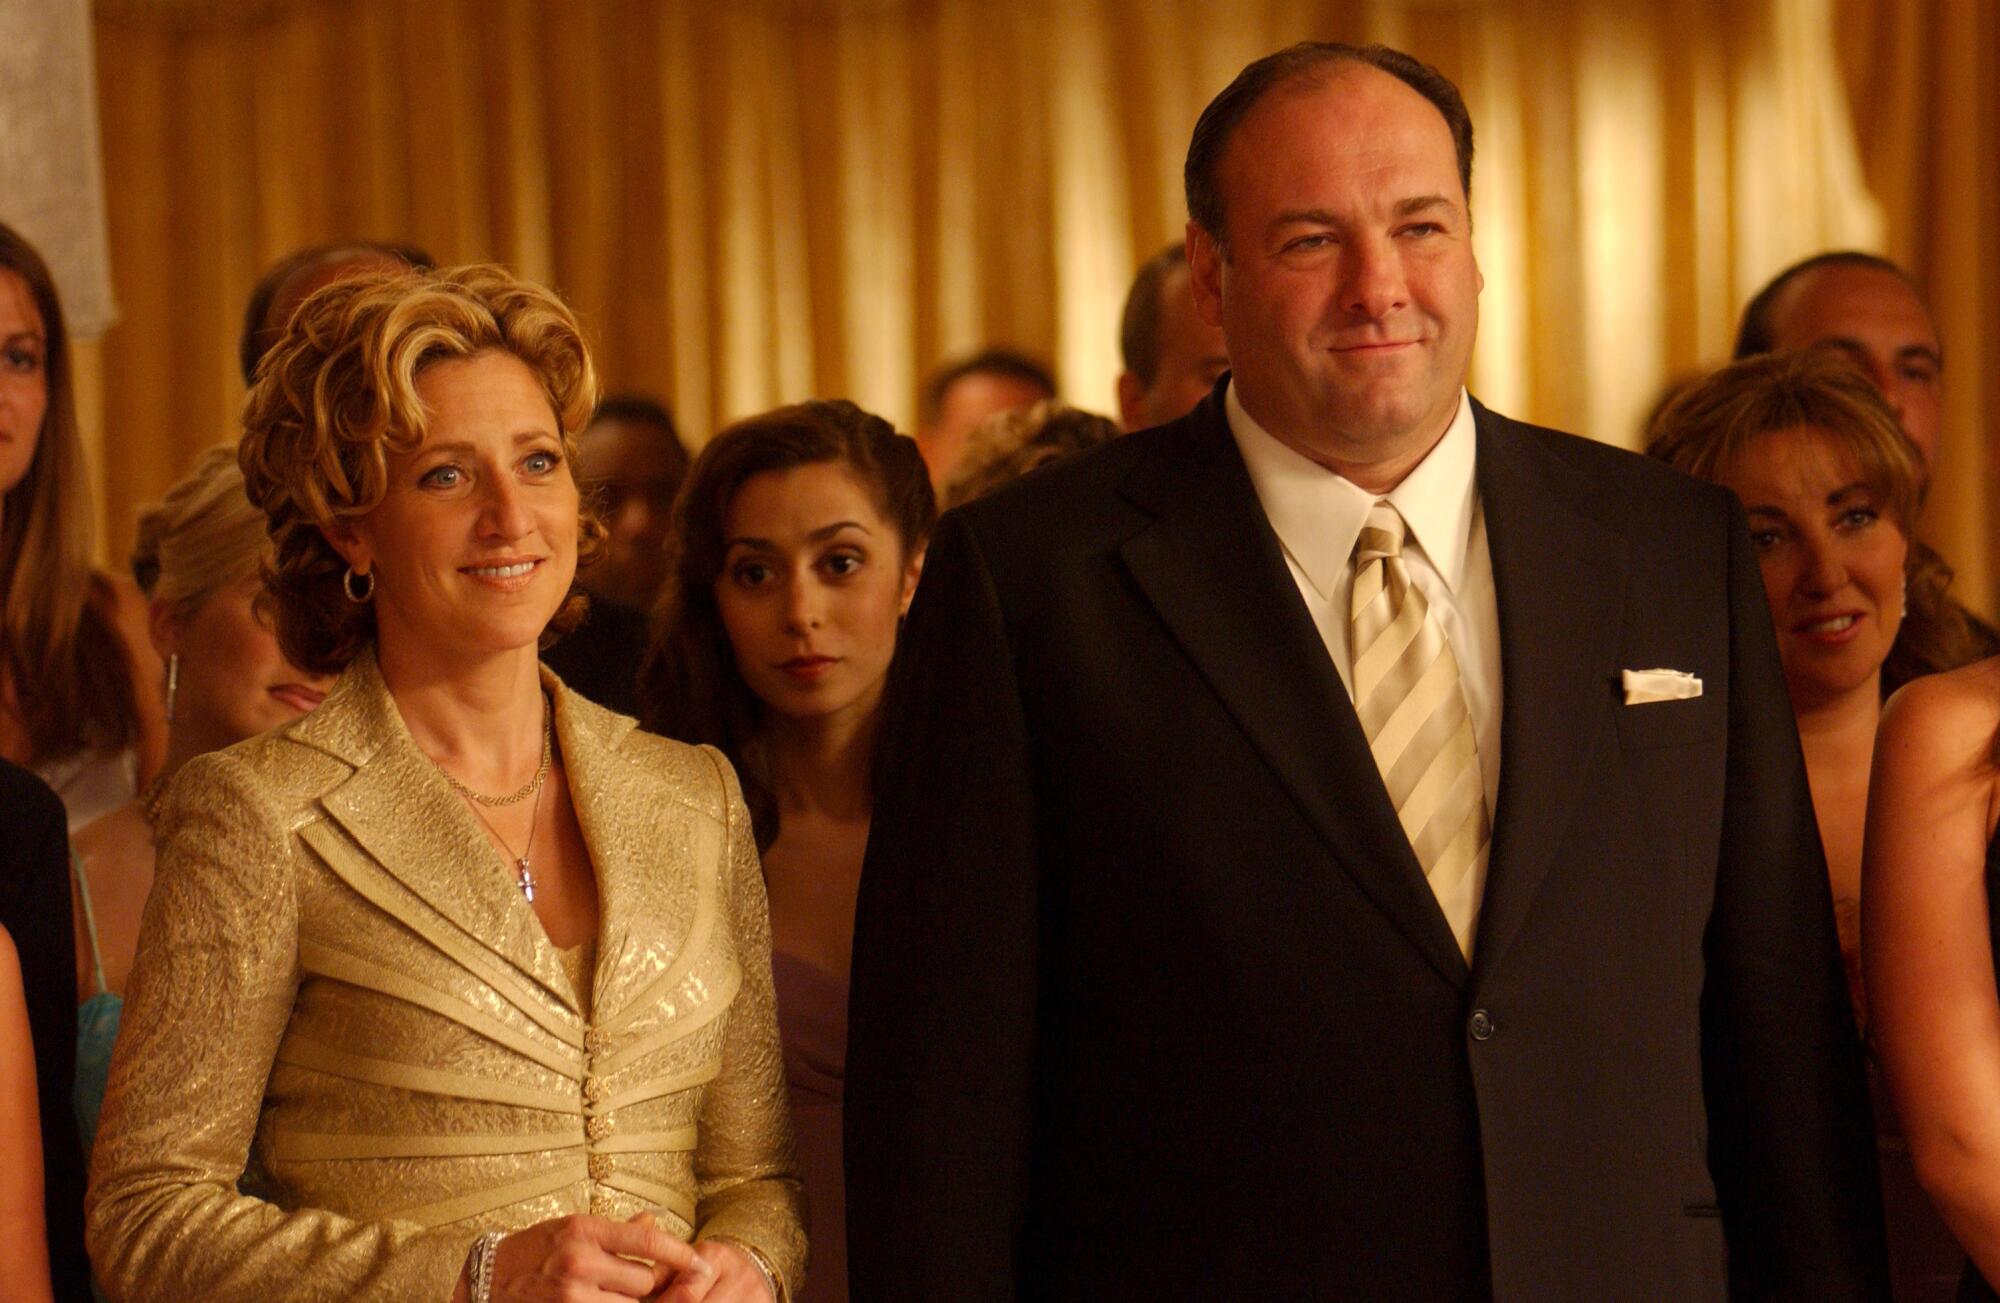 Edie Falco and James Gandolfini in "The Sopranos."